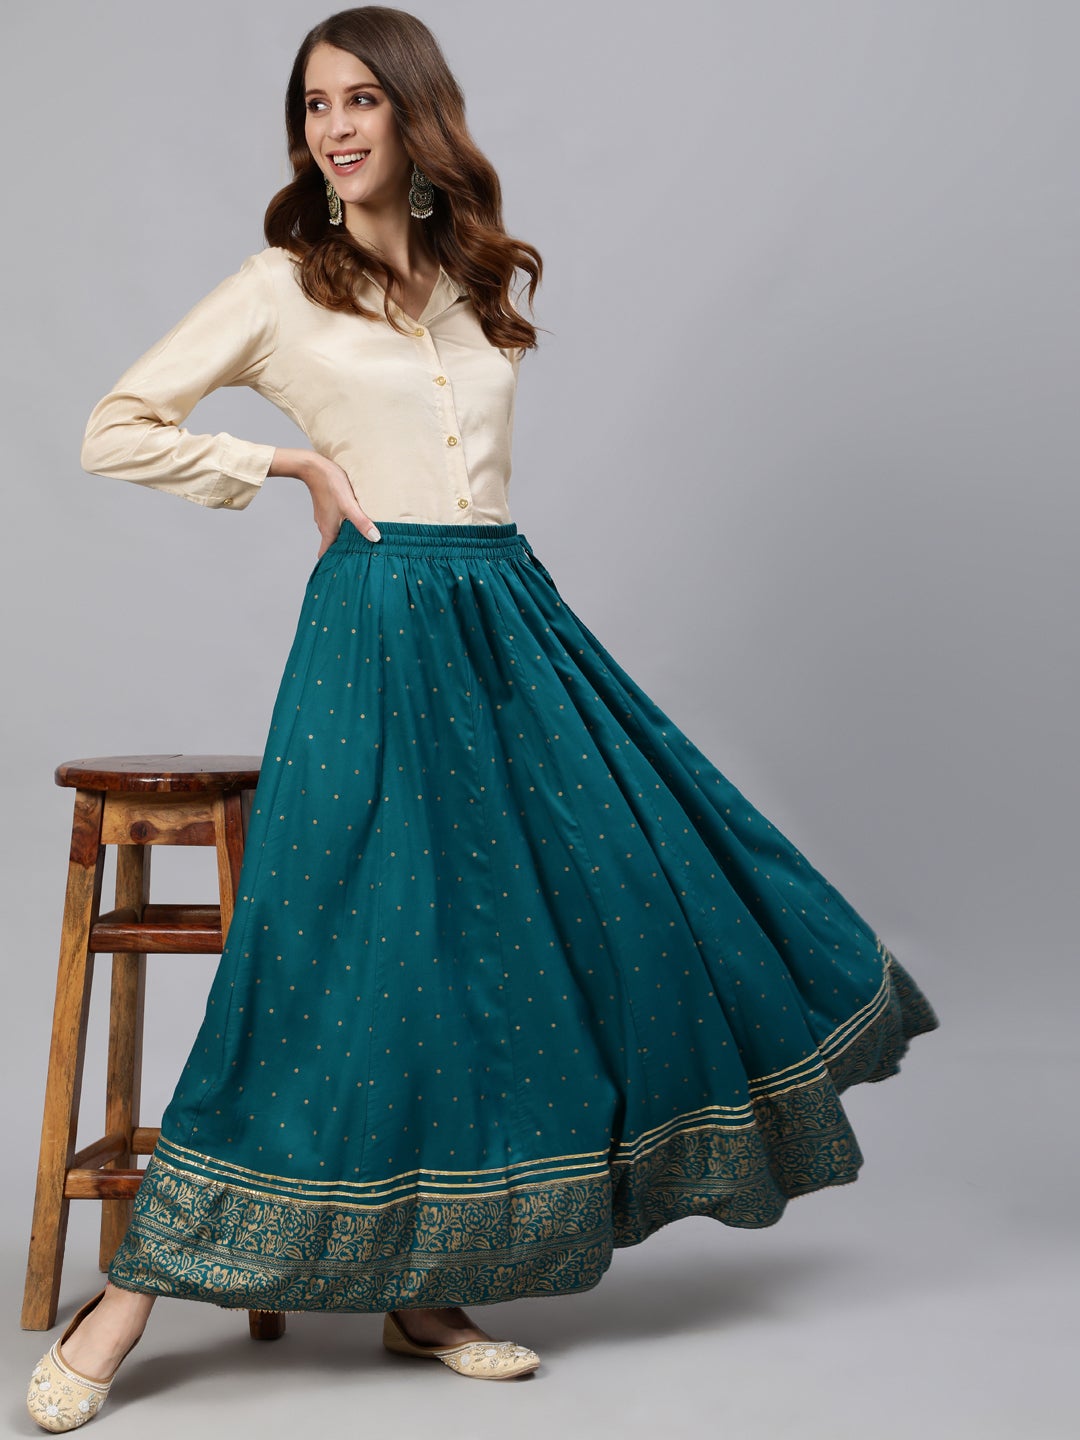 Turquoise Blue & Golden Ethnic Motifs Print Flared Maxi Skirt